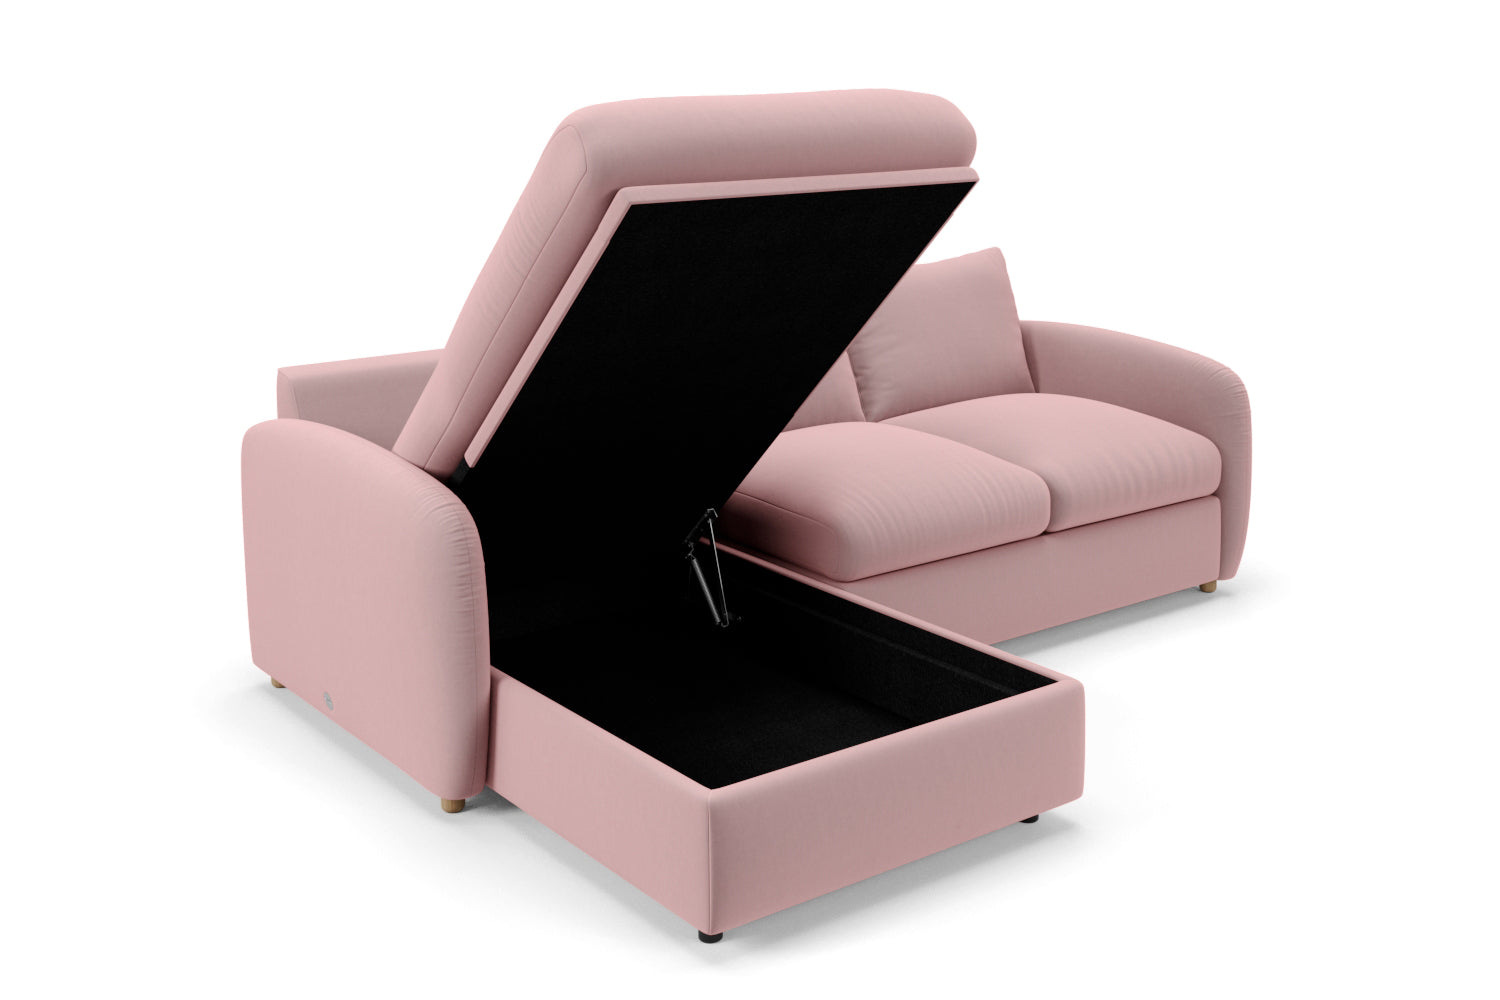 SNUG | The Small Biggie Chaise Corner Sofa in Blush variant_40575169462320